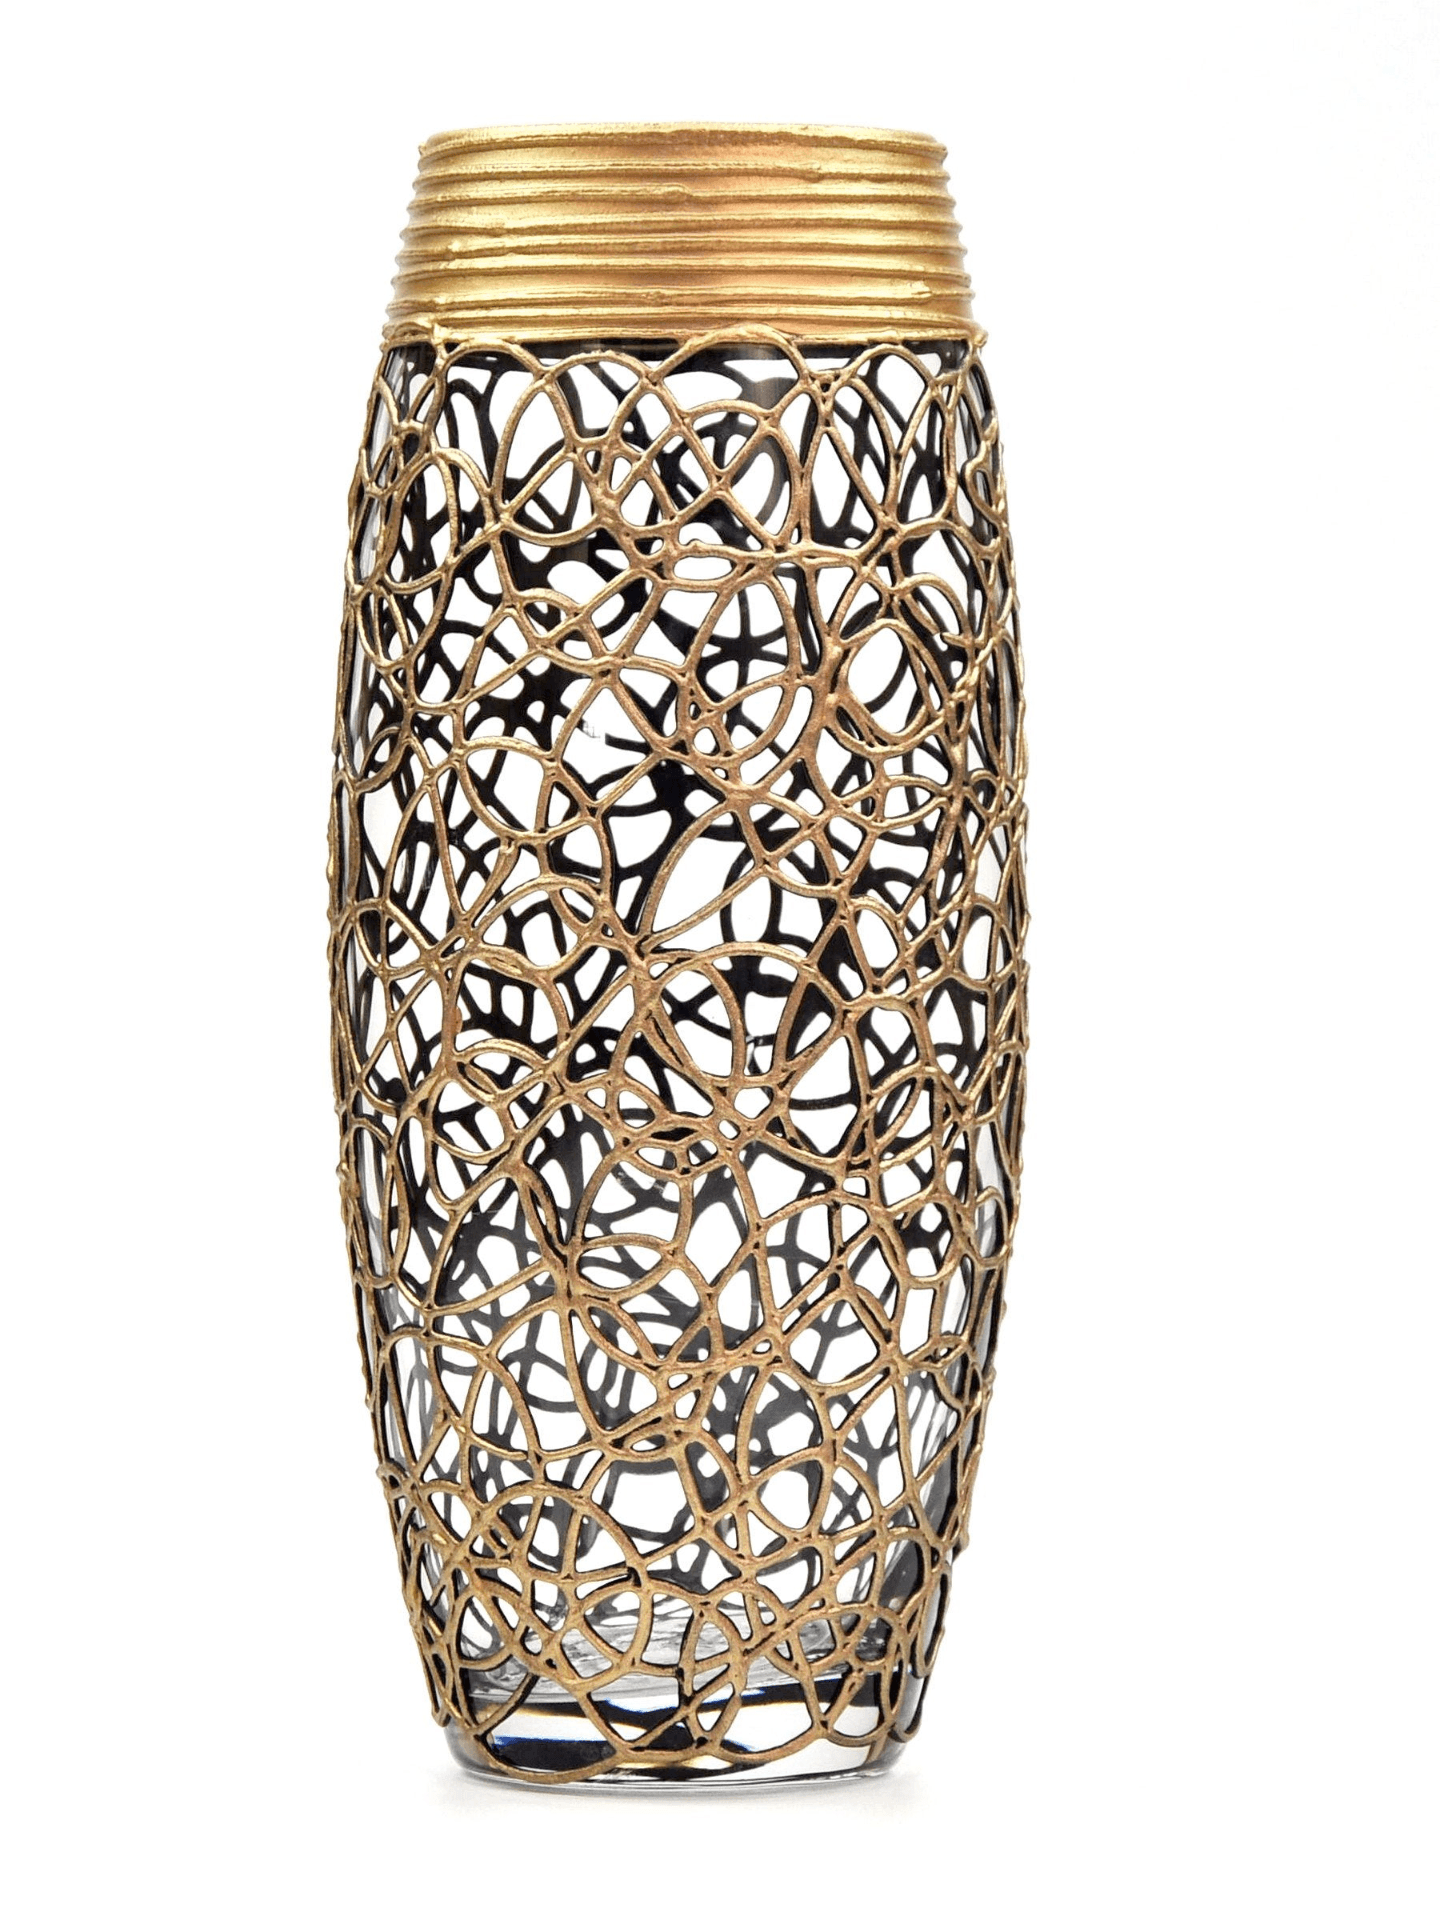 Handpainted Glass Vase | Gold Infinity Art | Interior Design Home Decor | Table vase | 7736/250/888  